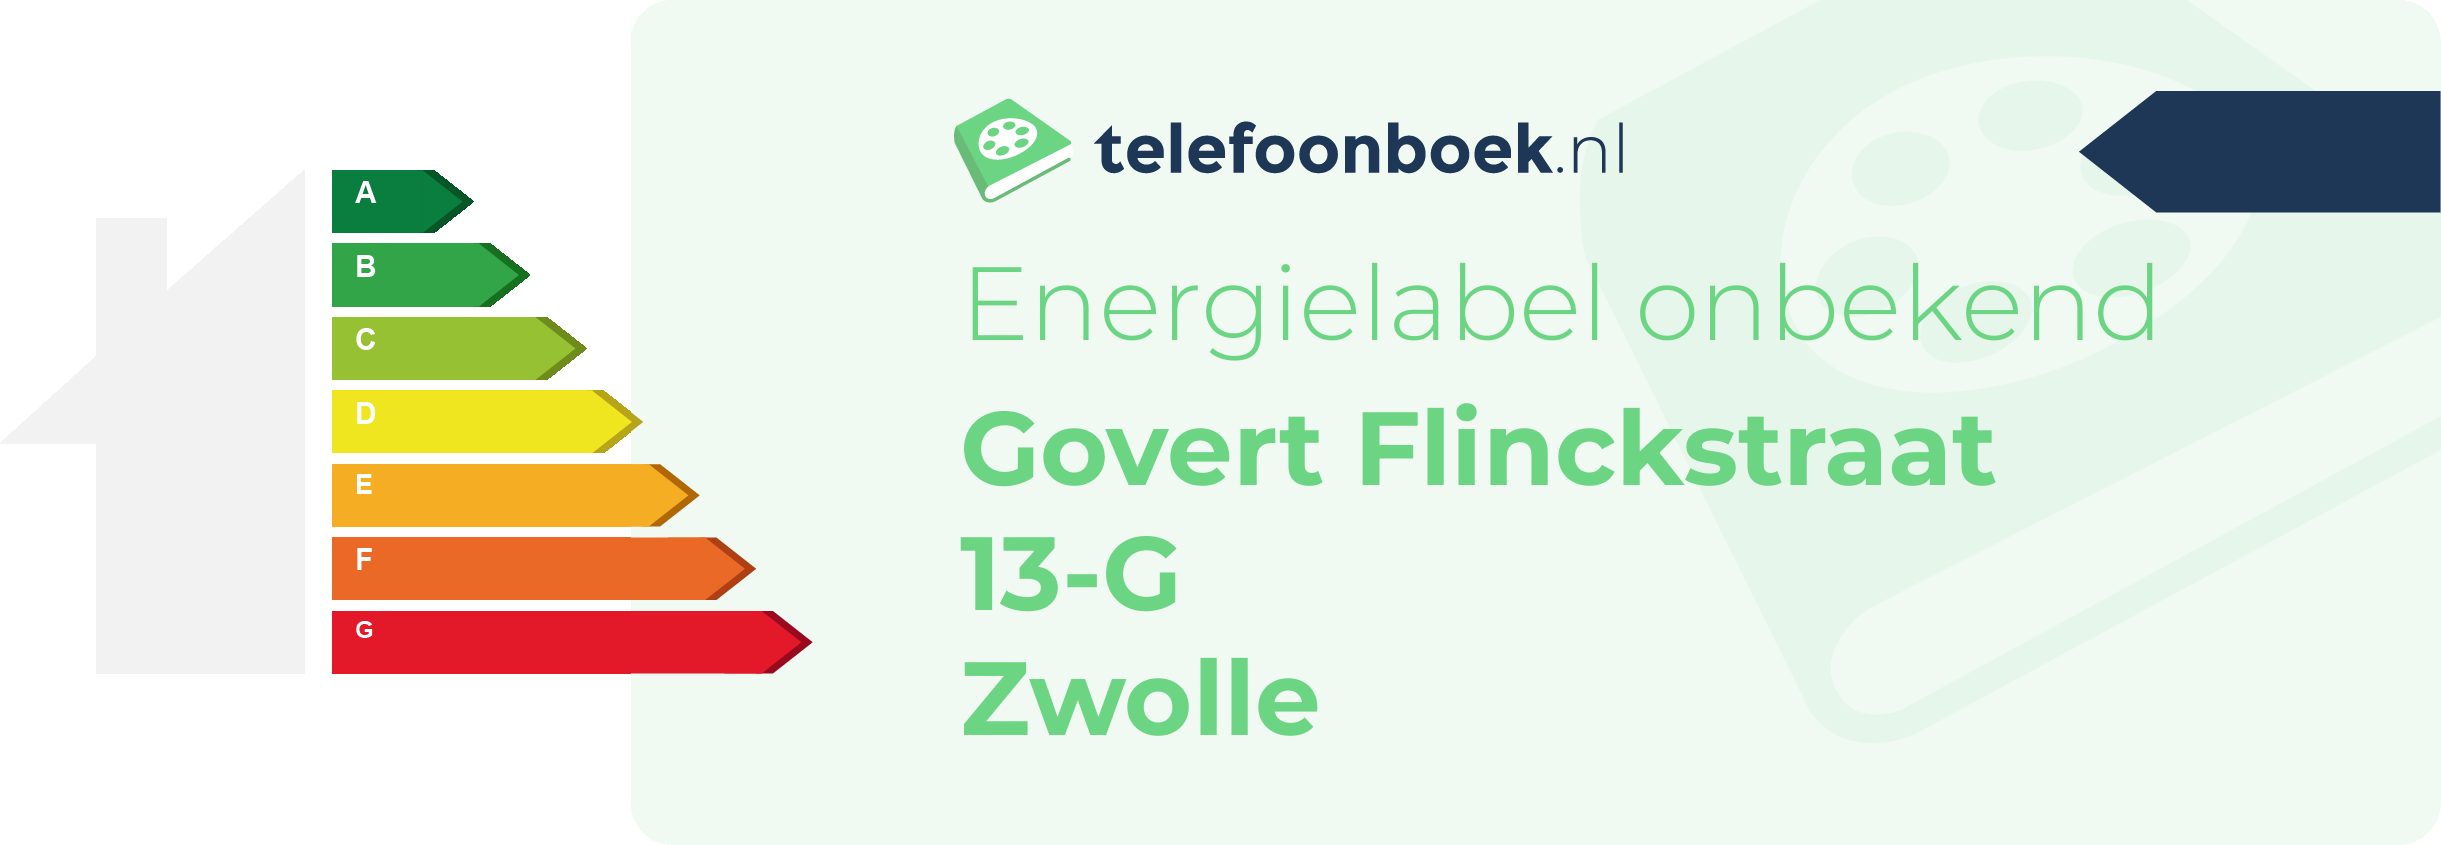 Energielabel Govert Flinckstraat 13-G Zwolle